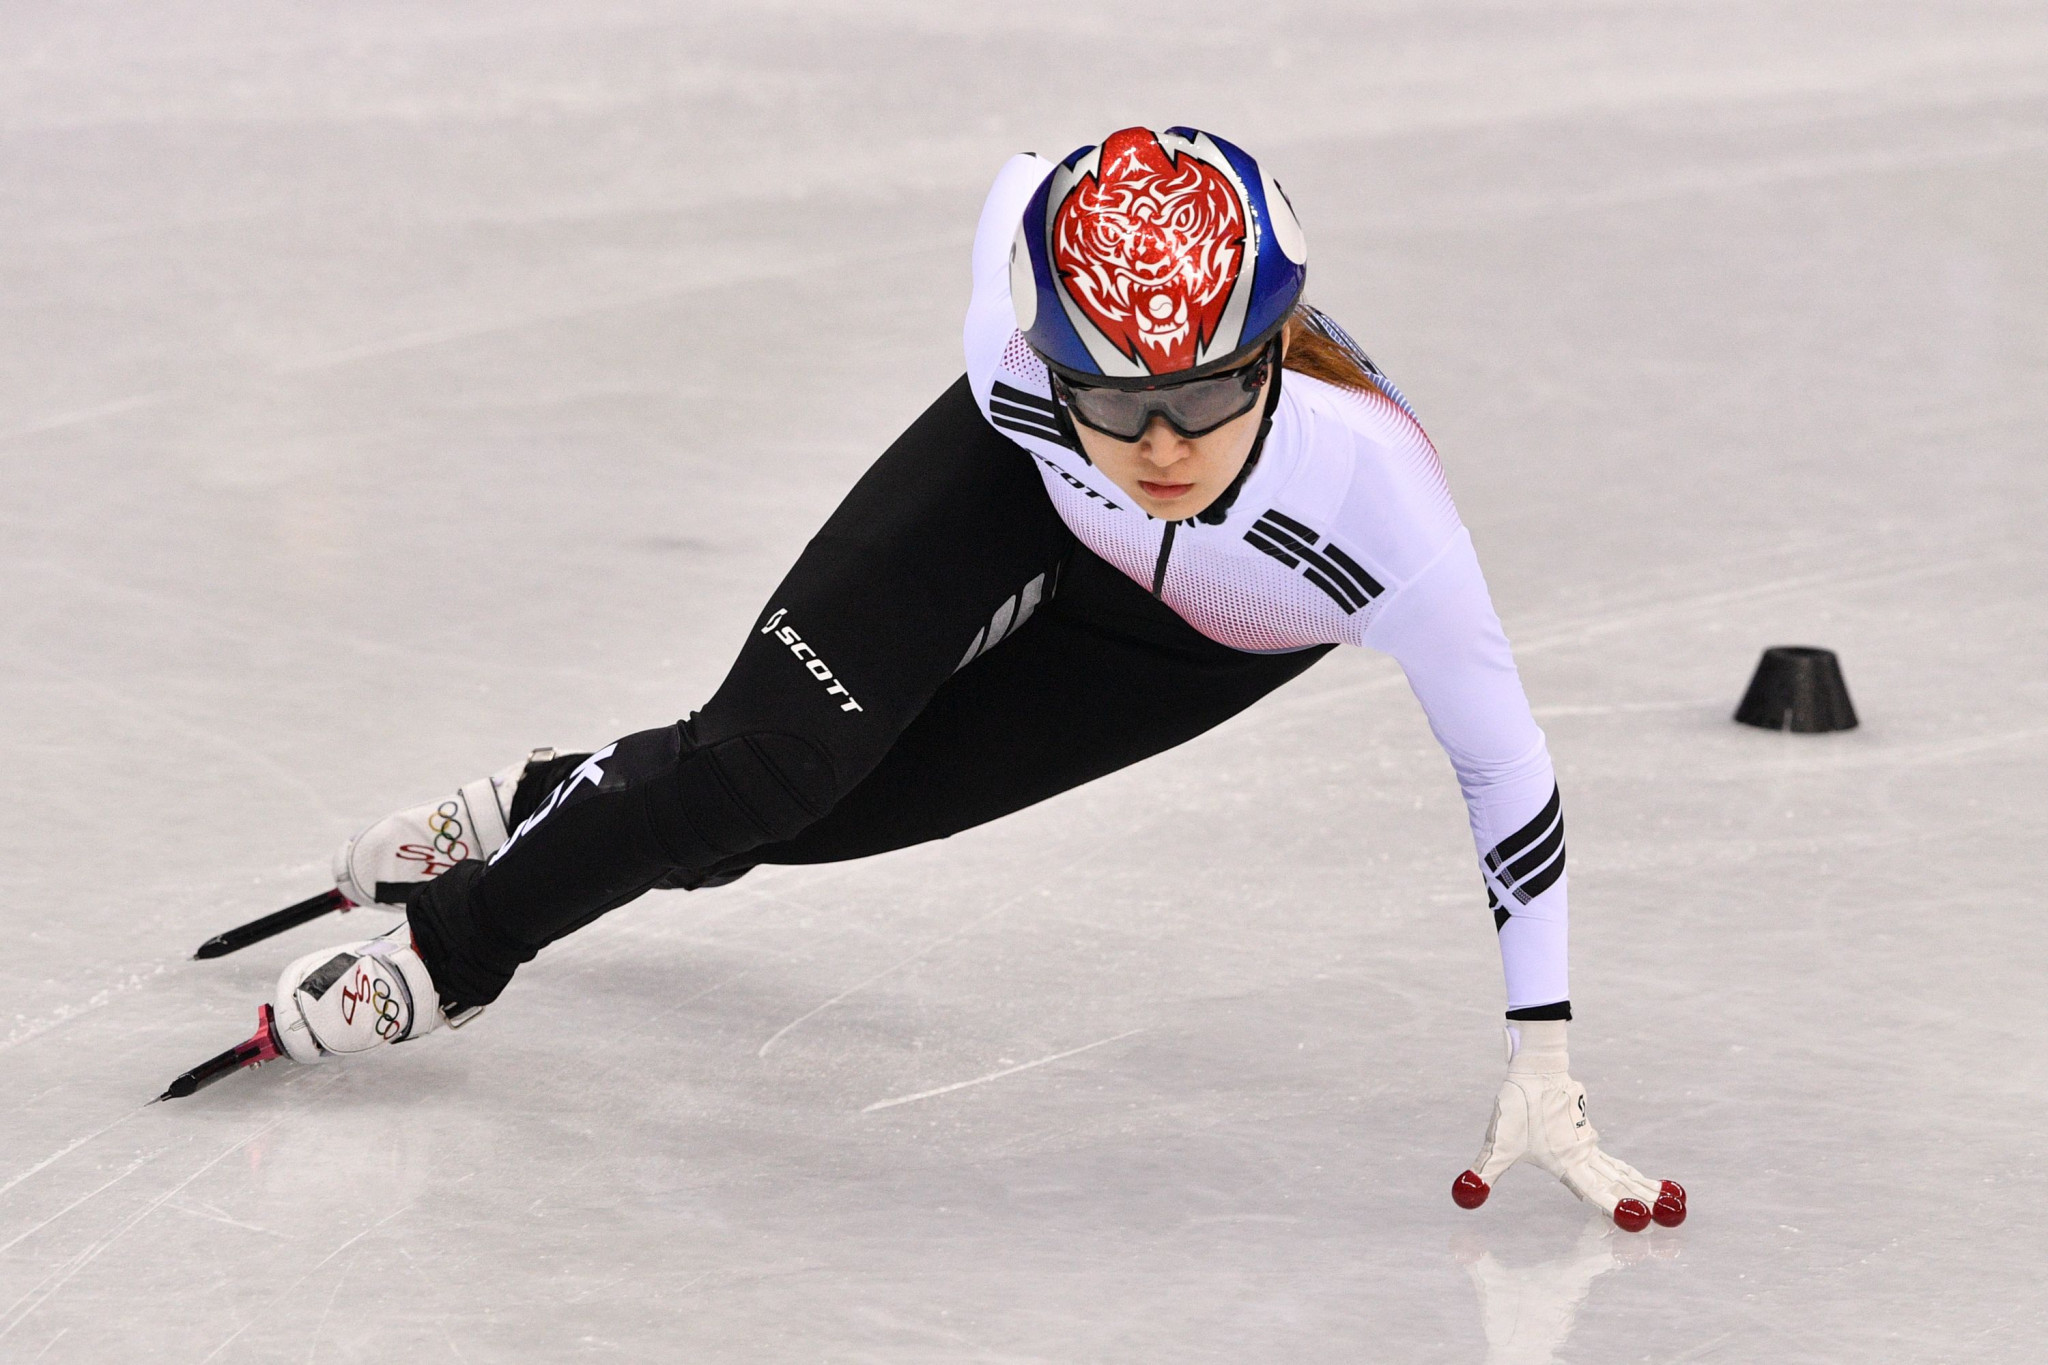 South Korea dominate opening day of finals at ISU World Short Track Speed Skating Championships